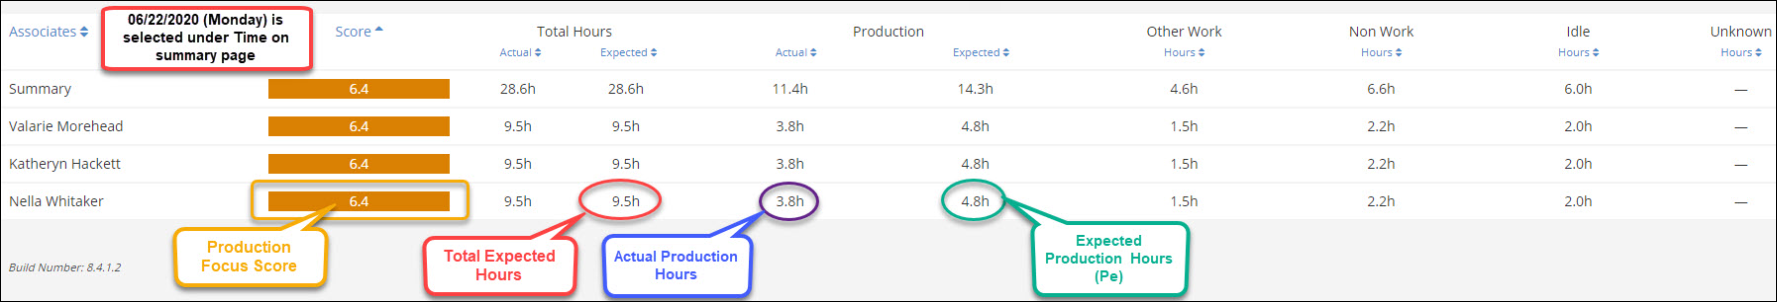 Production focus score example